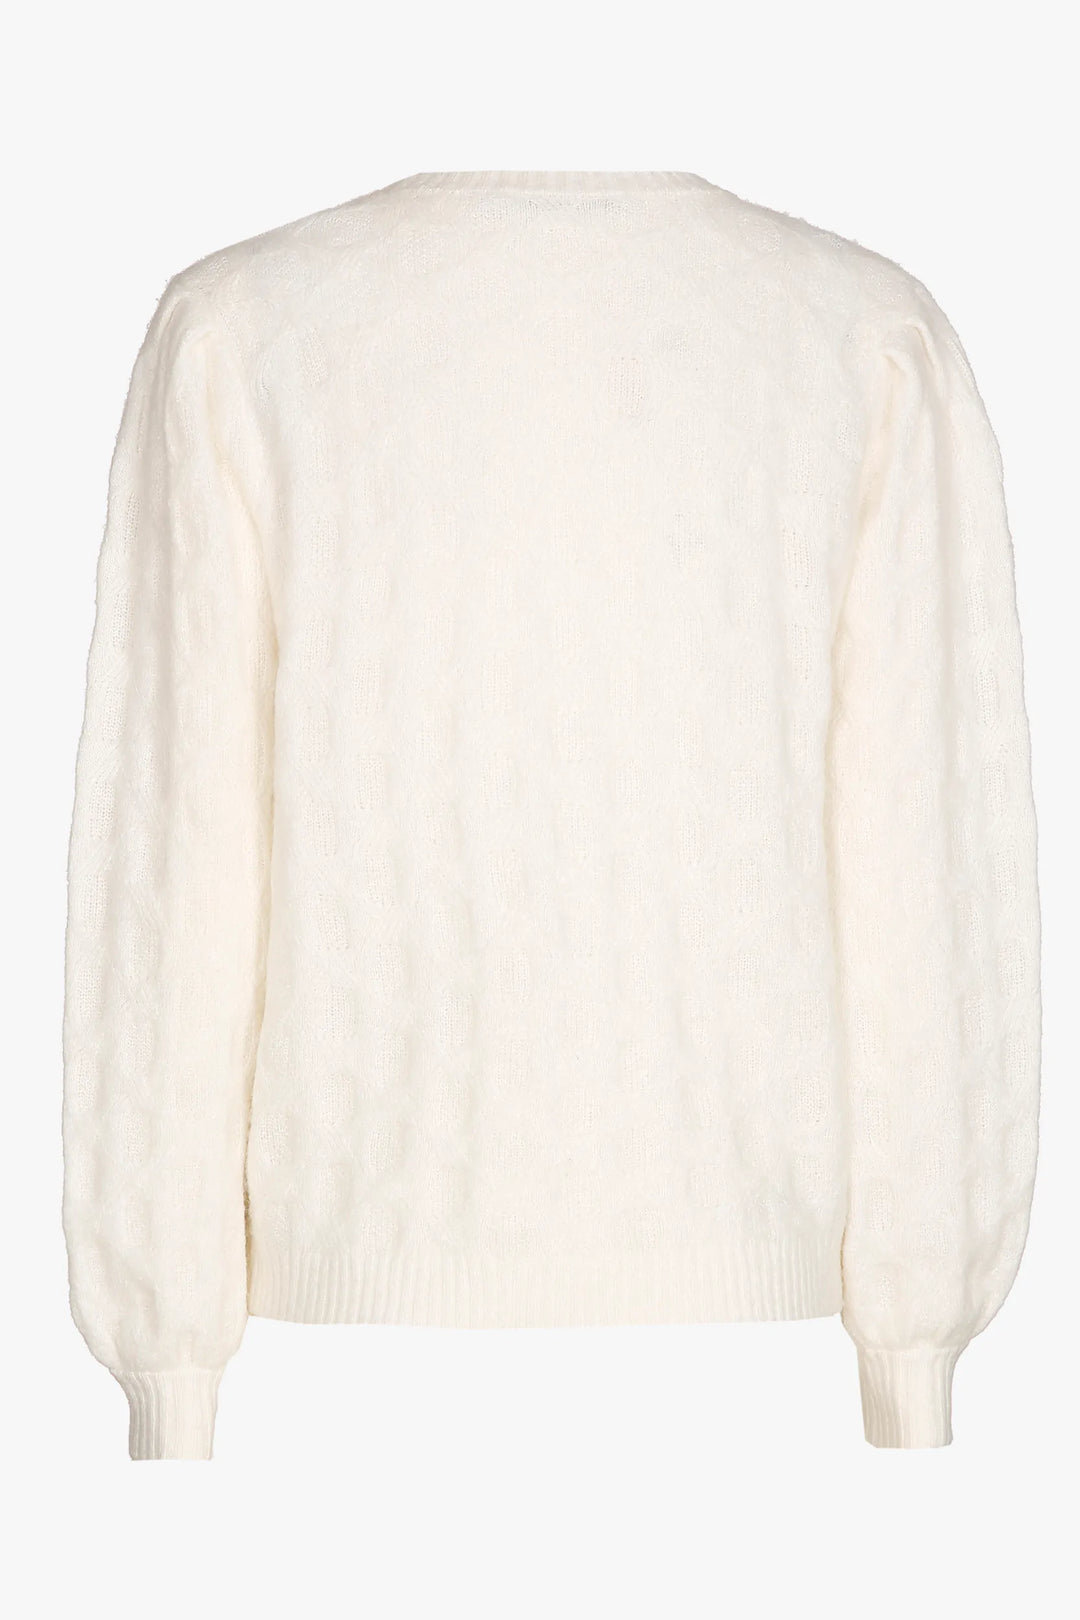 mount blanc trui met alpacawol - xandres - - grote maten - dameskleding - kledingwinkel - herent - leuven